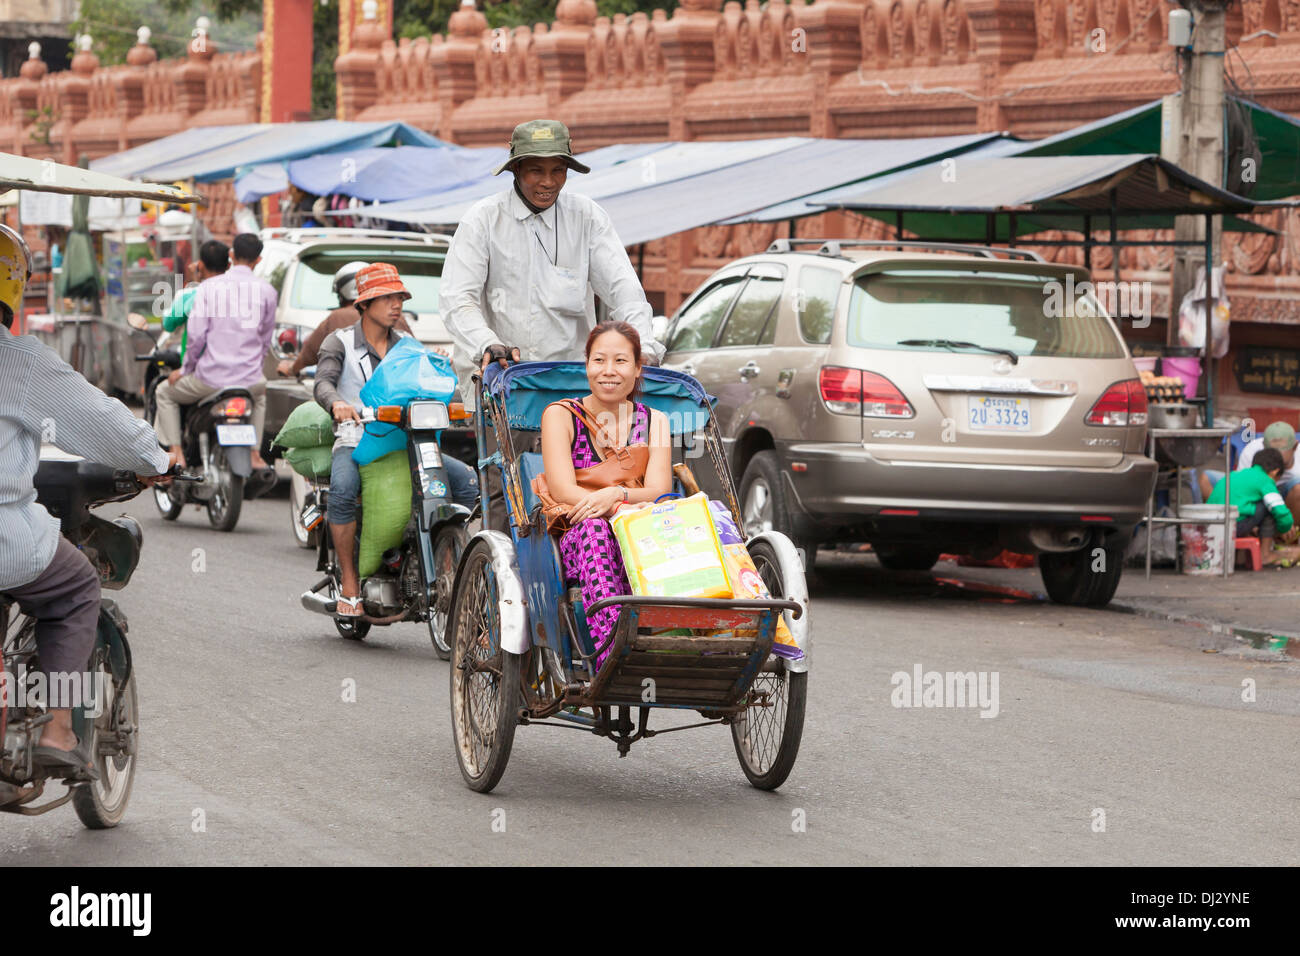 Cyclo with happy passenger in Phnom Penh, Cambodia Stock Photo